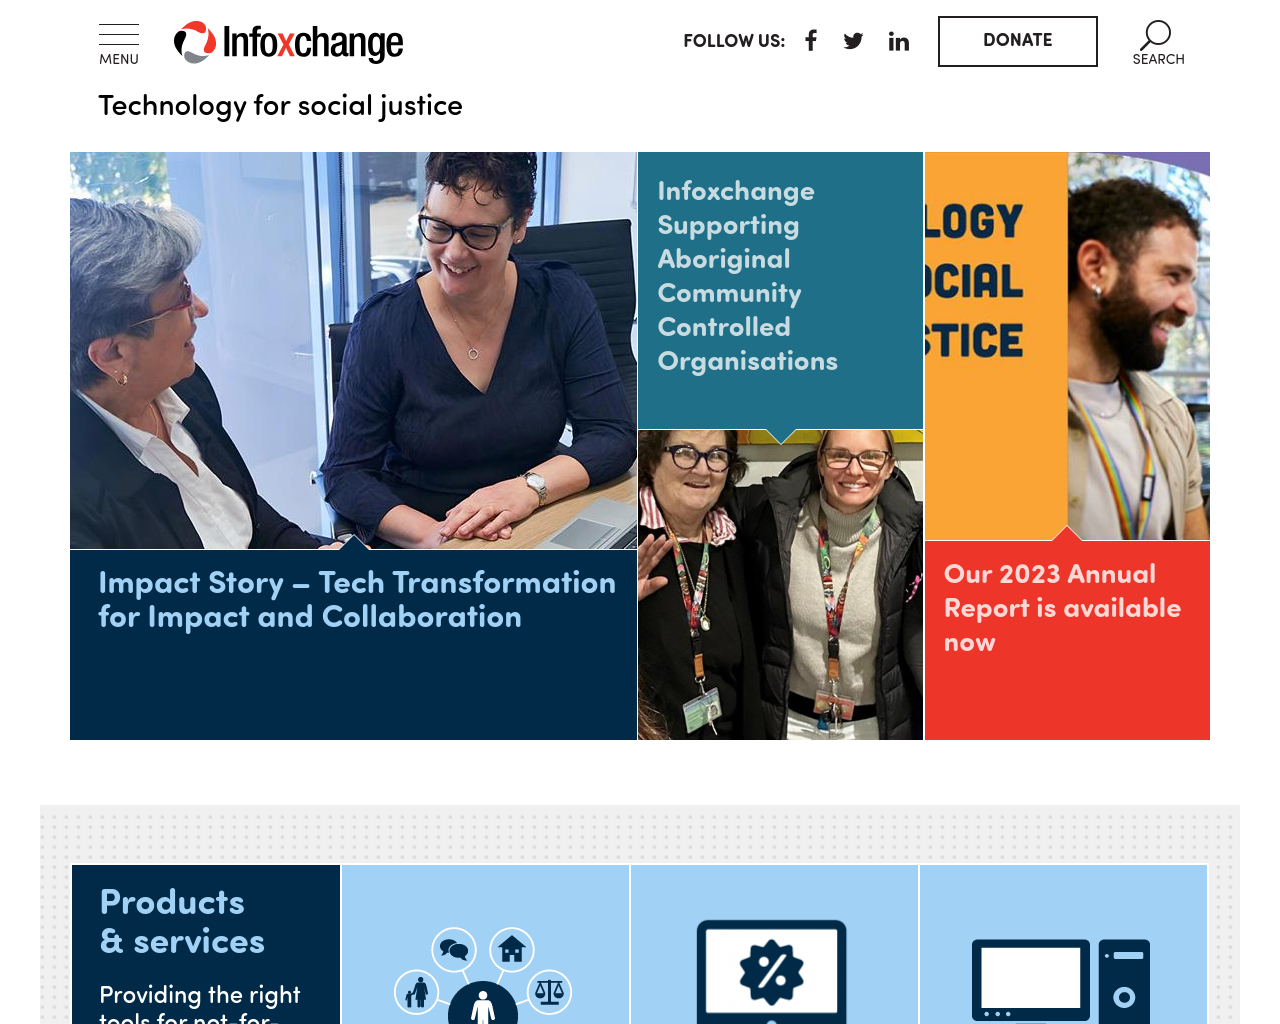 infoxchange.net.au